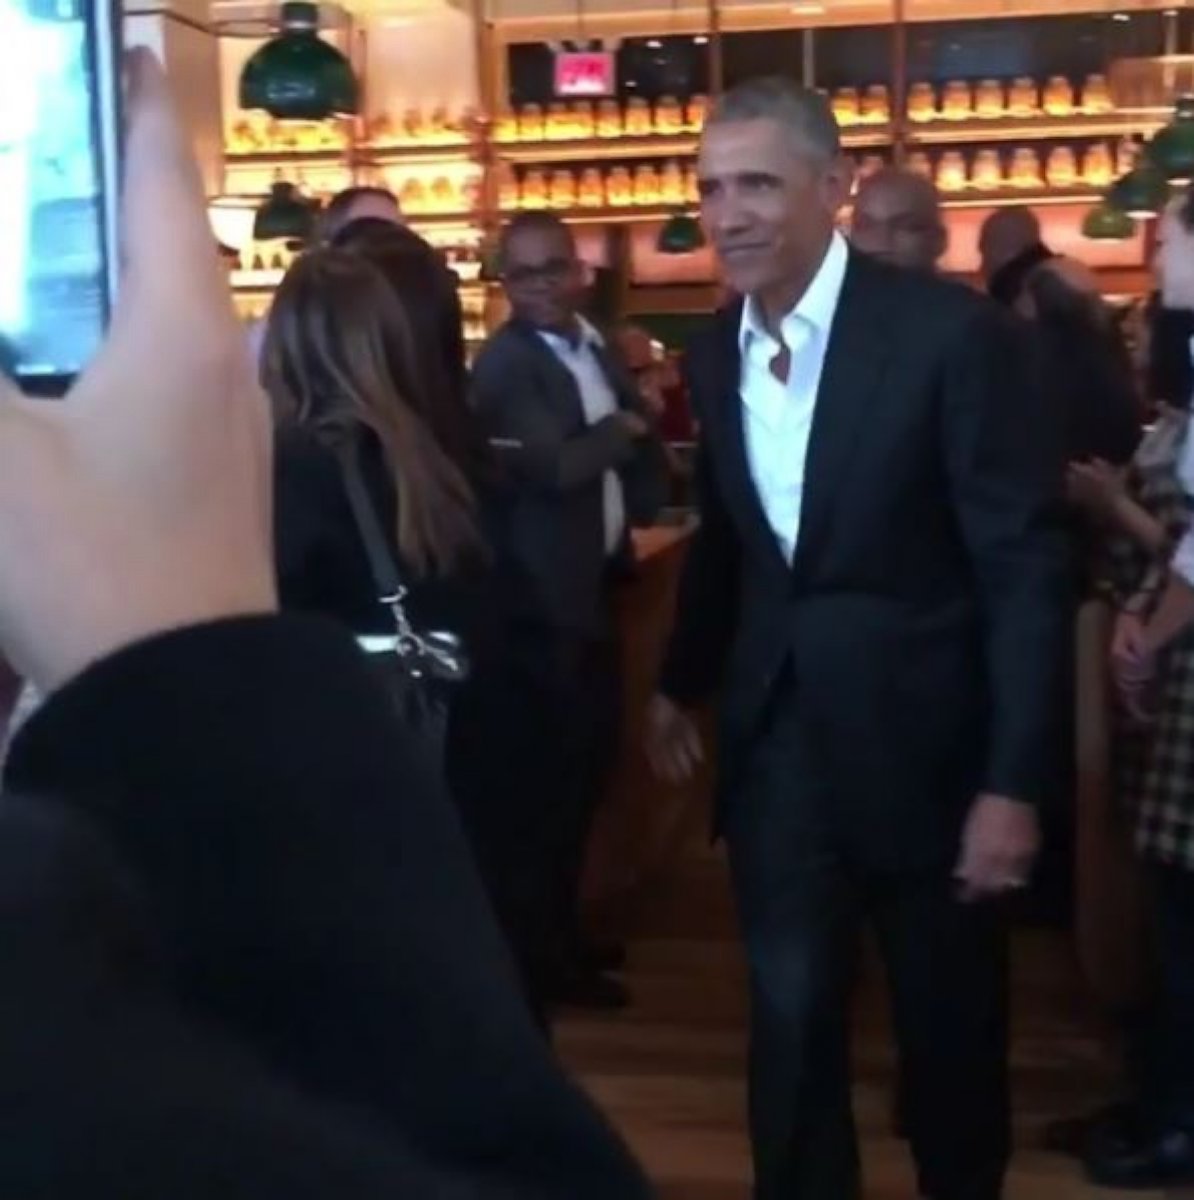 PHOTO: Former President Barack Obama at Upland restaurant in New York City on March 10, 2017.